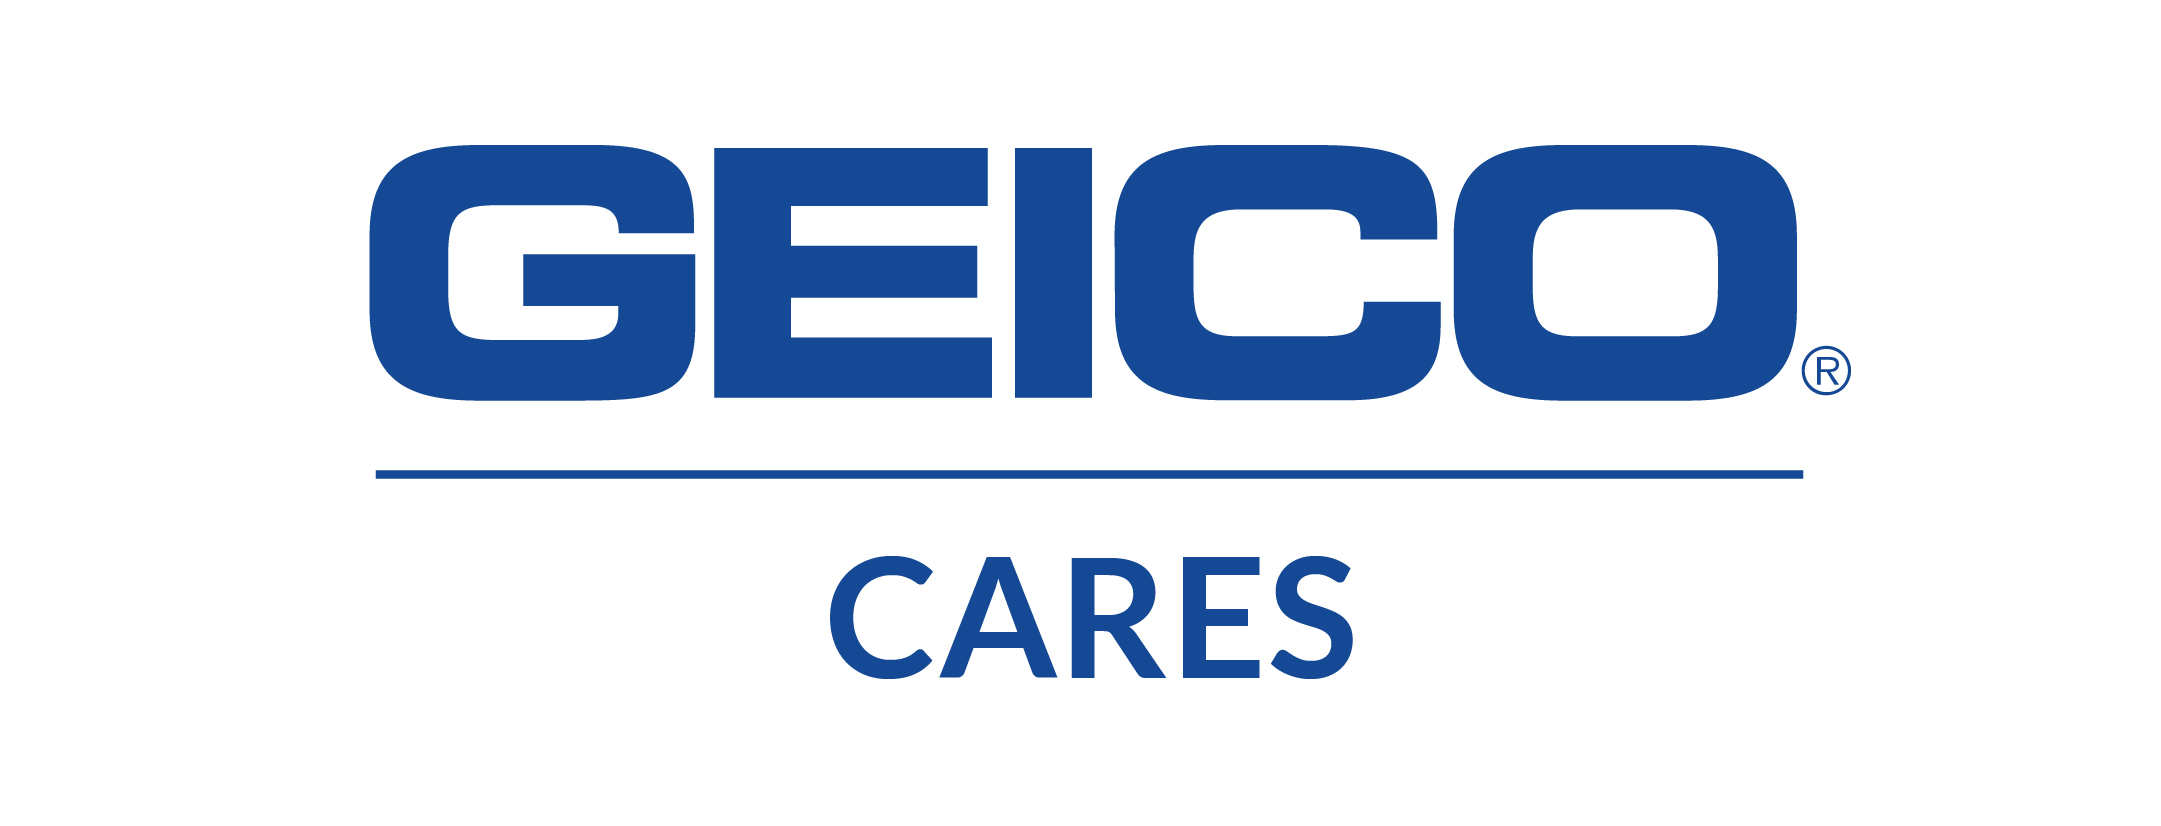 3 Geico Logo 2021